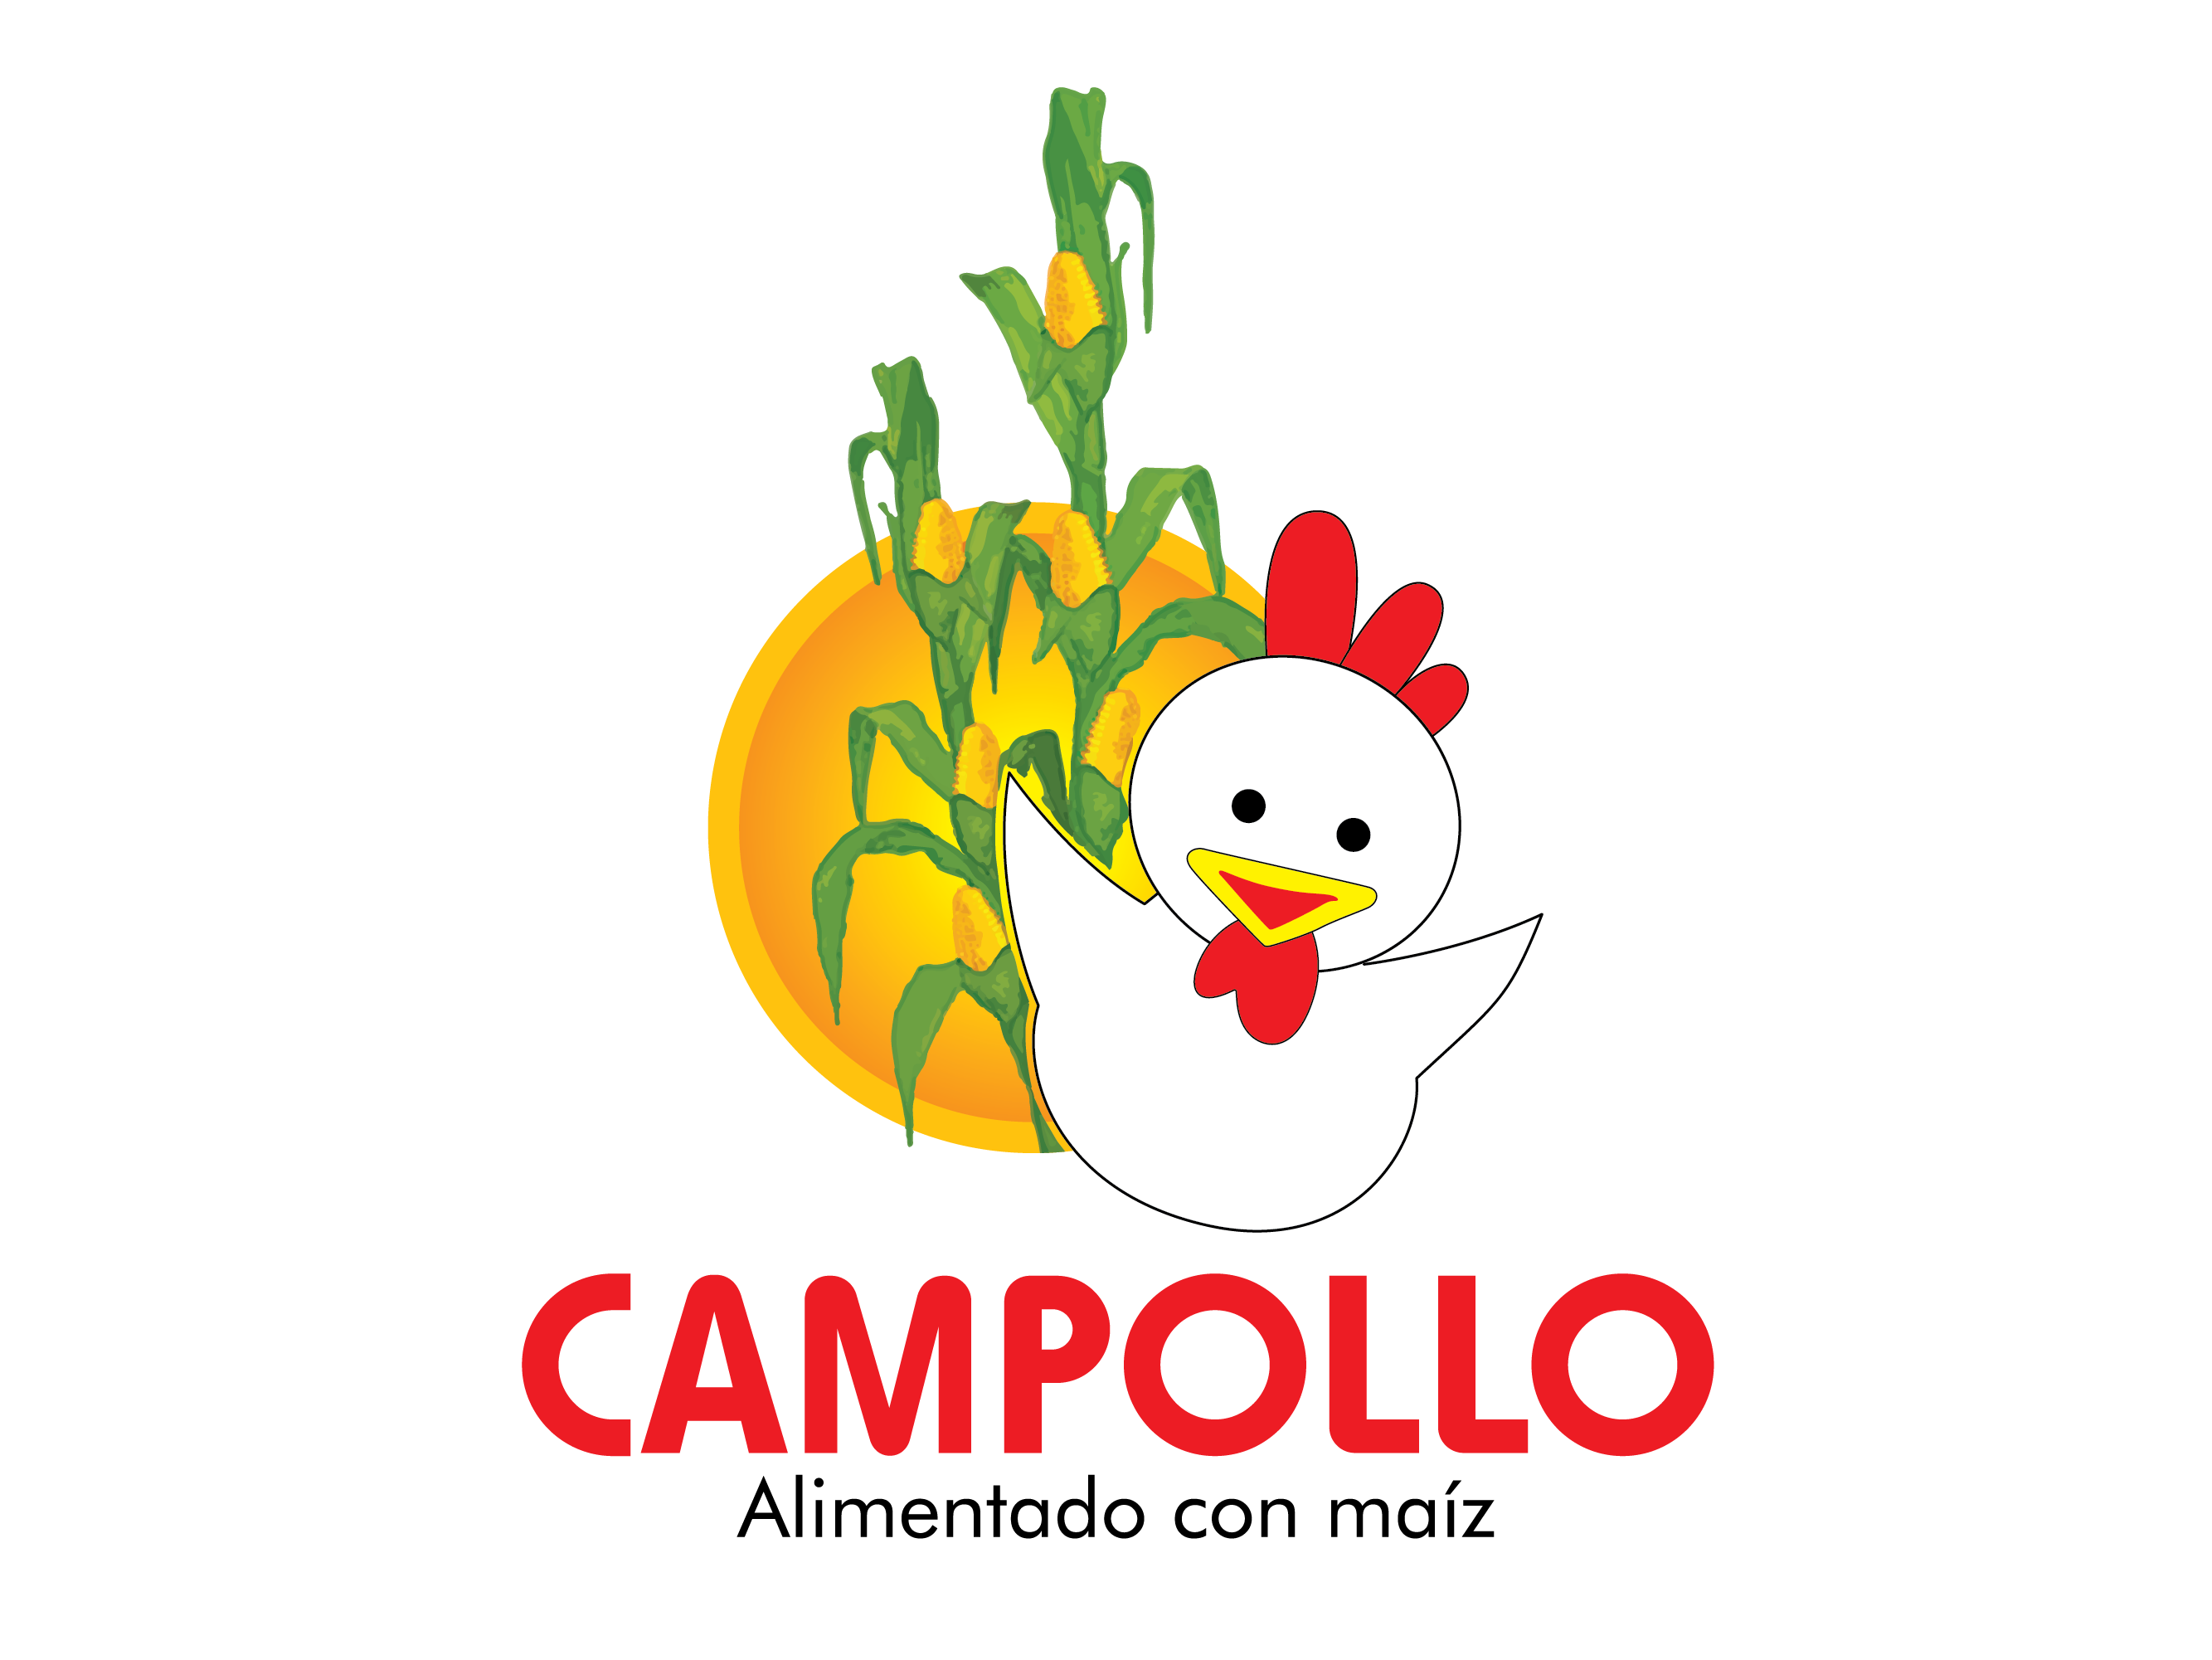 Campollo company logo image